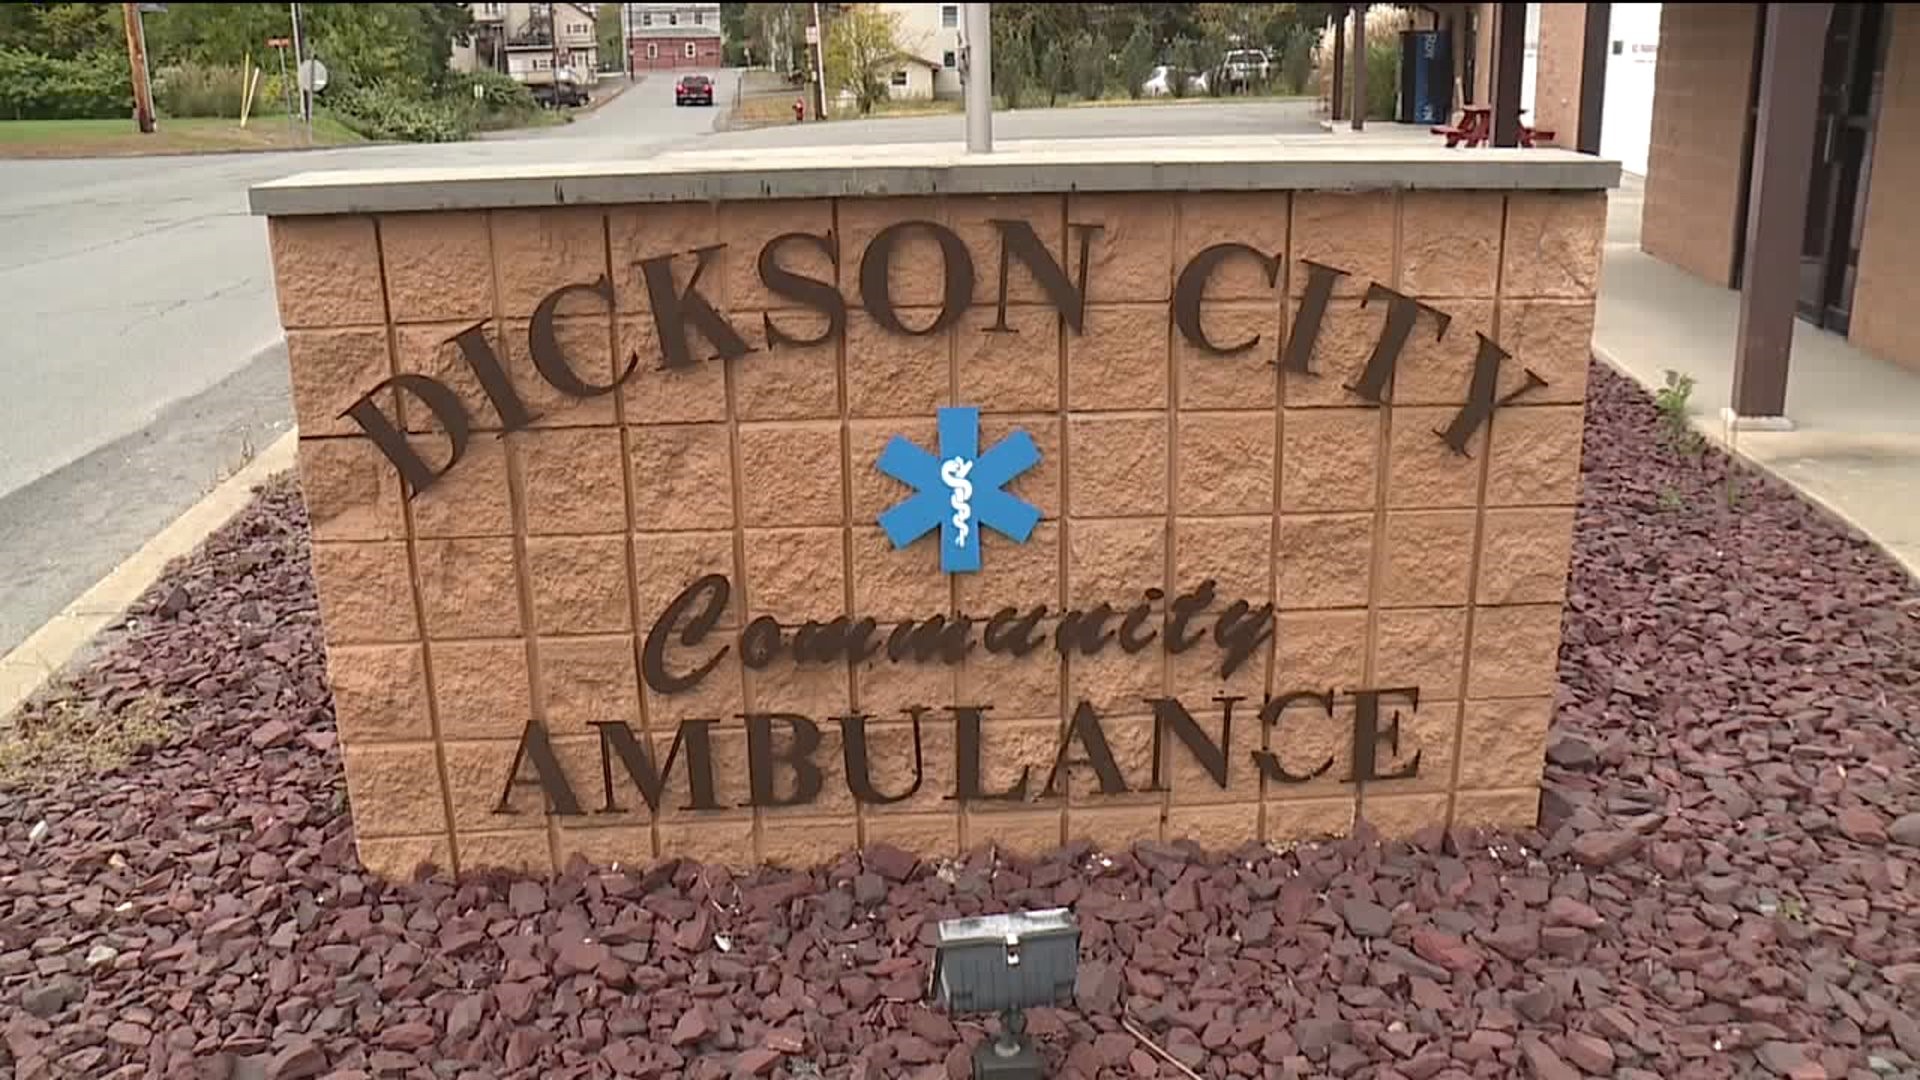 Dickson City Ambulance Service in Debt